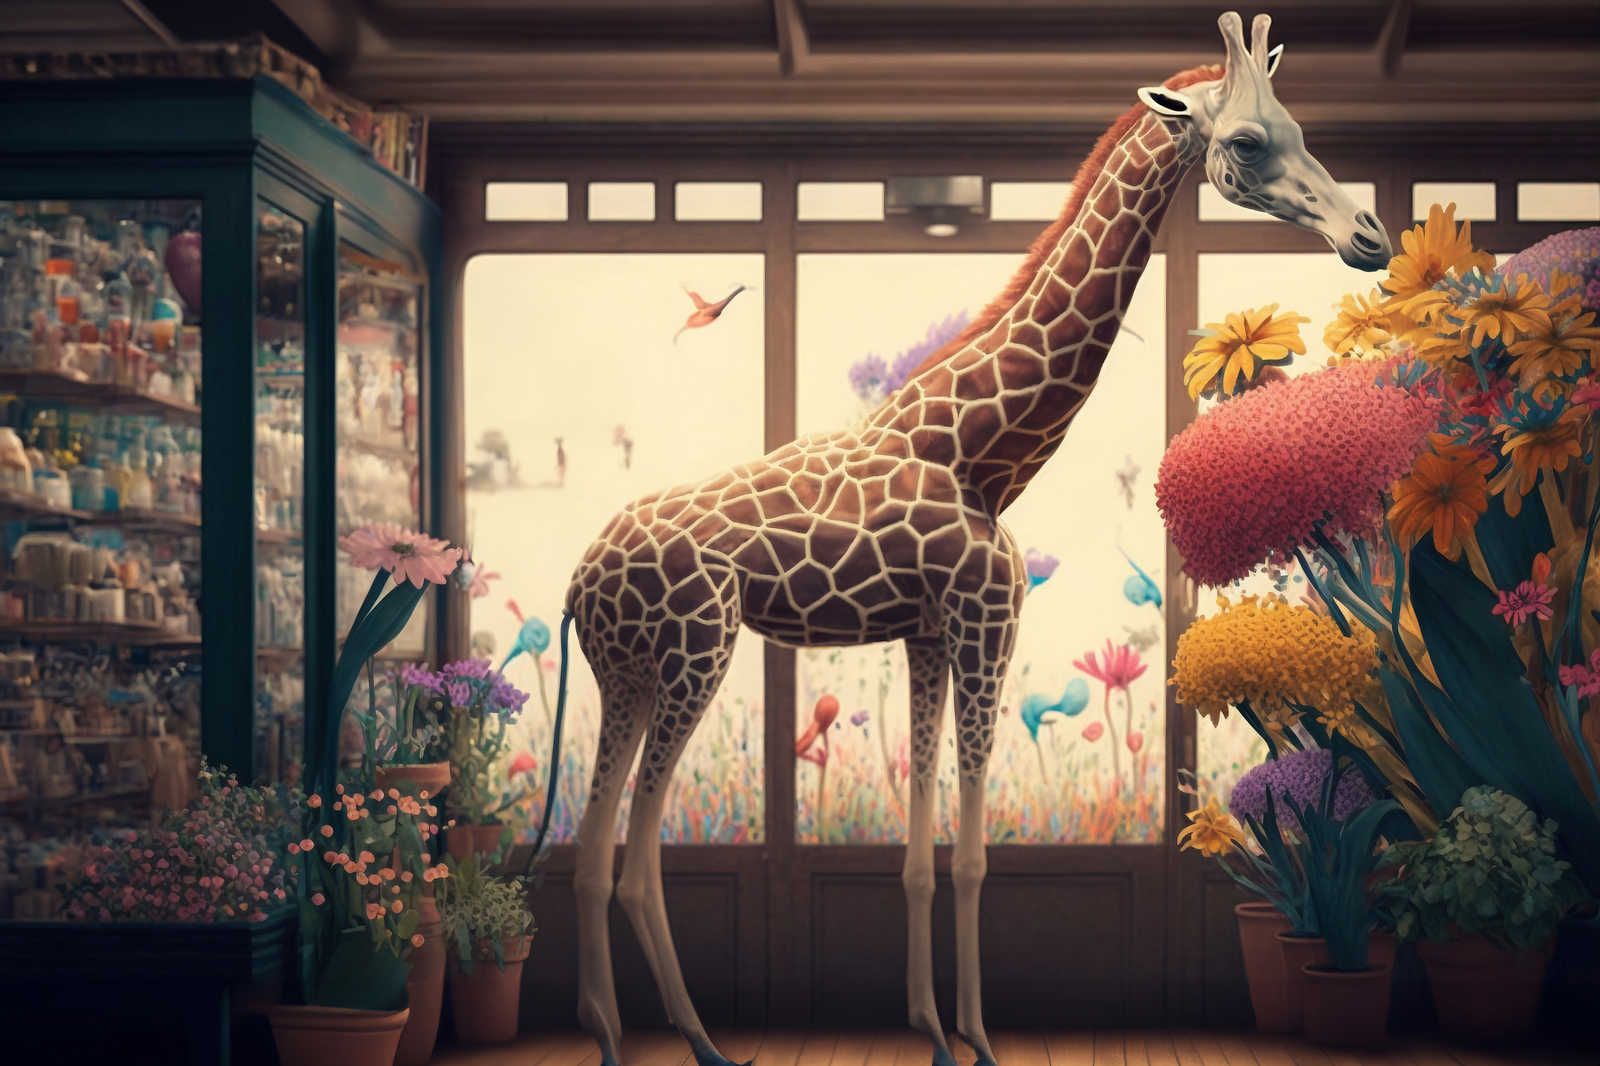             KI Canvas painting »flower giraffe« - 90 cm x 60 cm
        